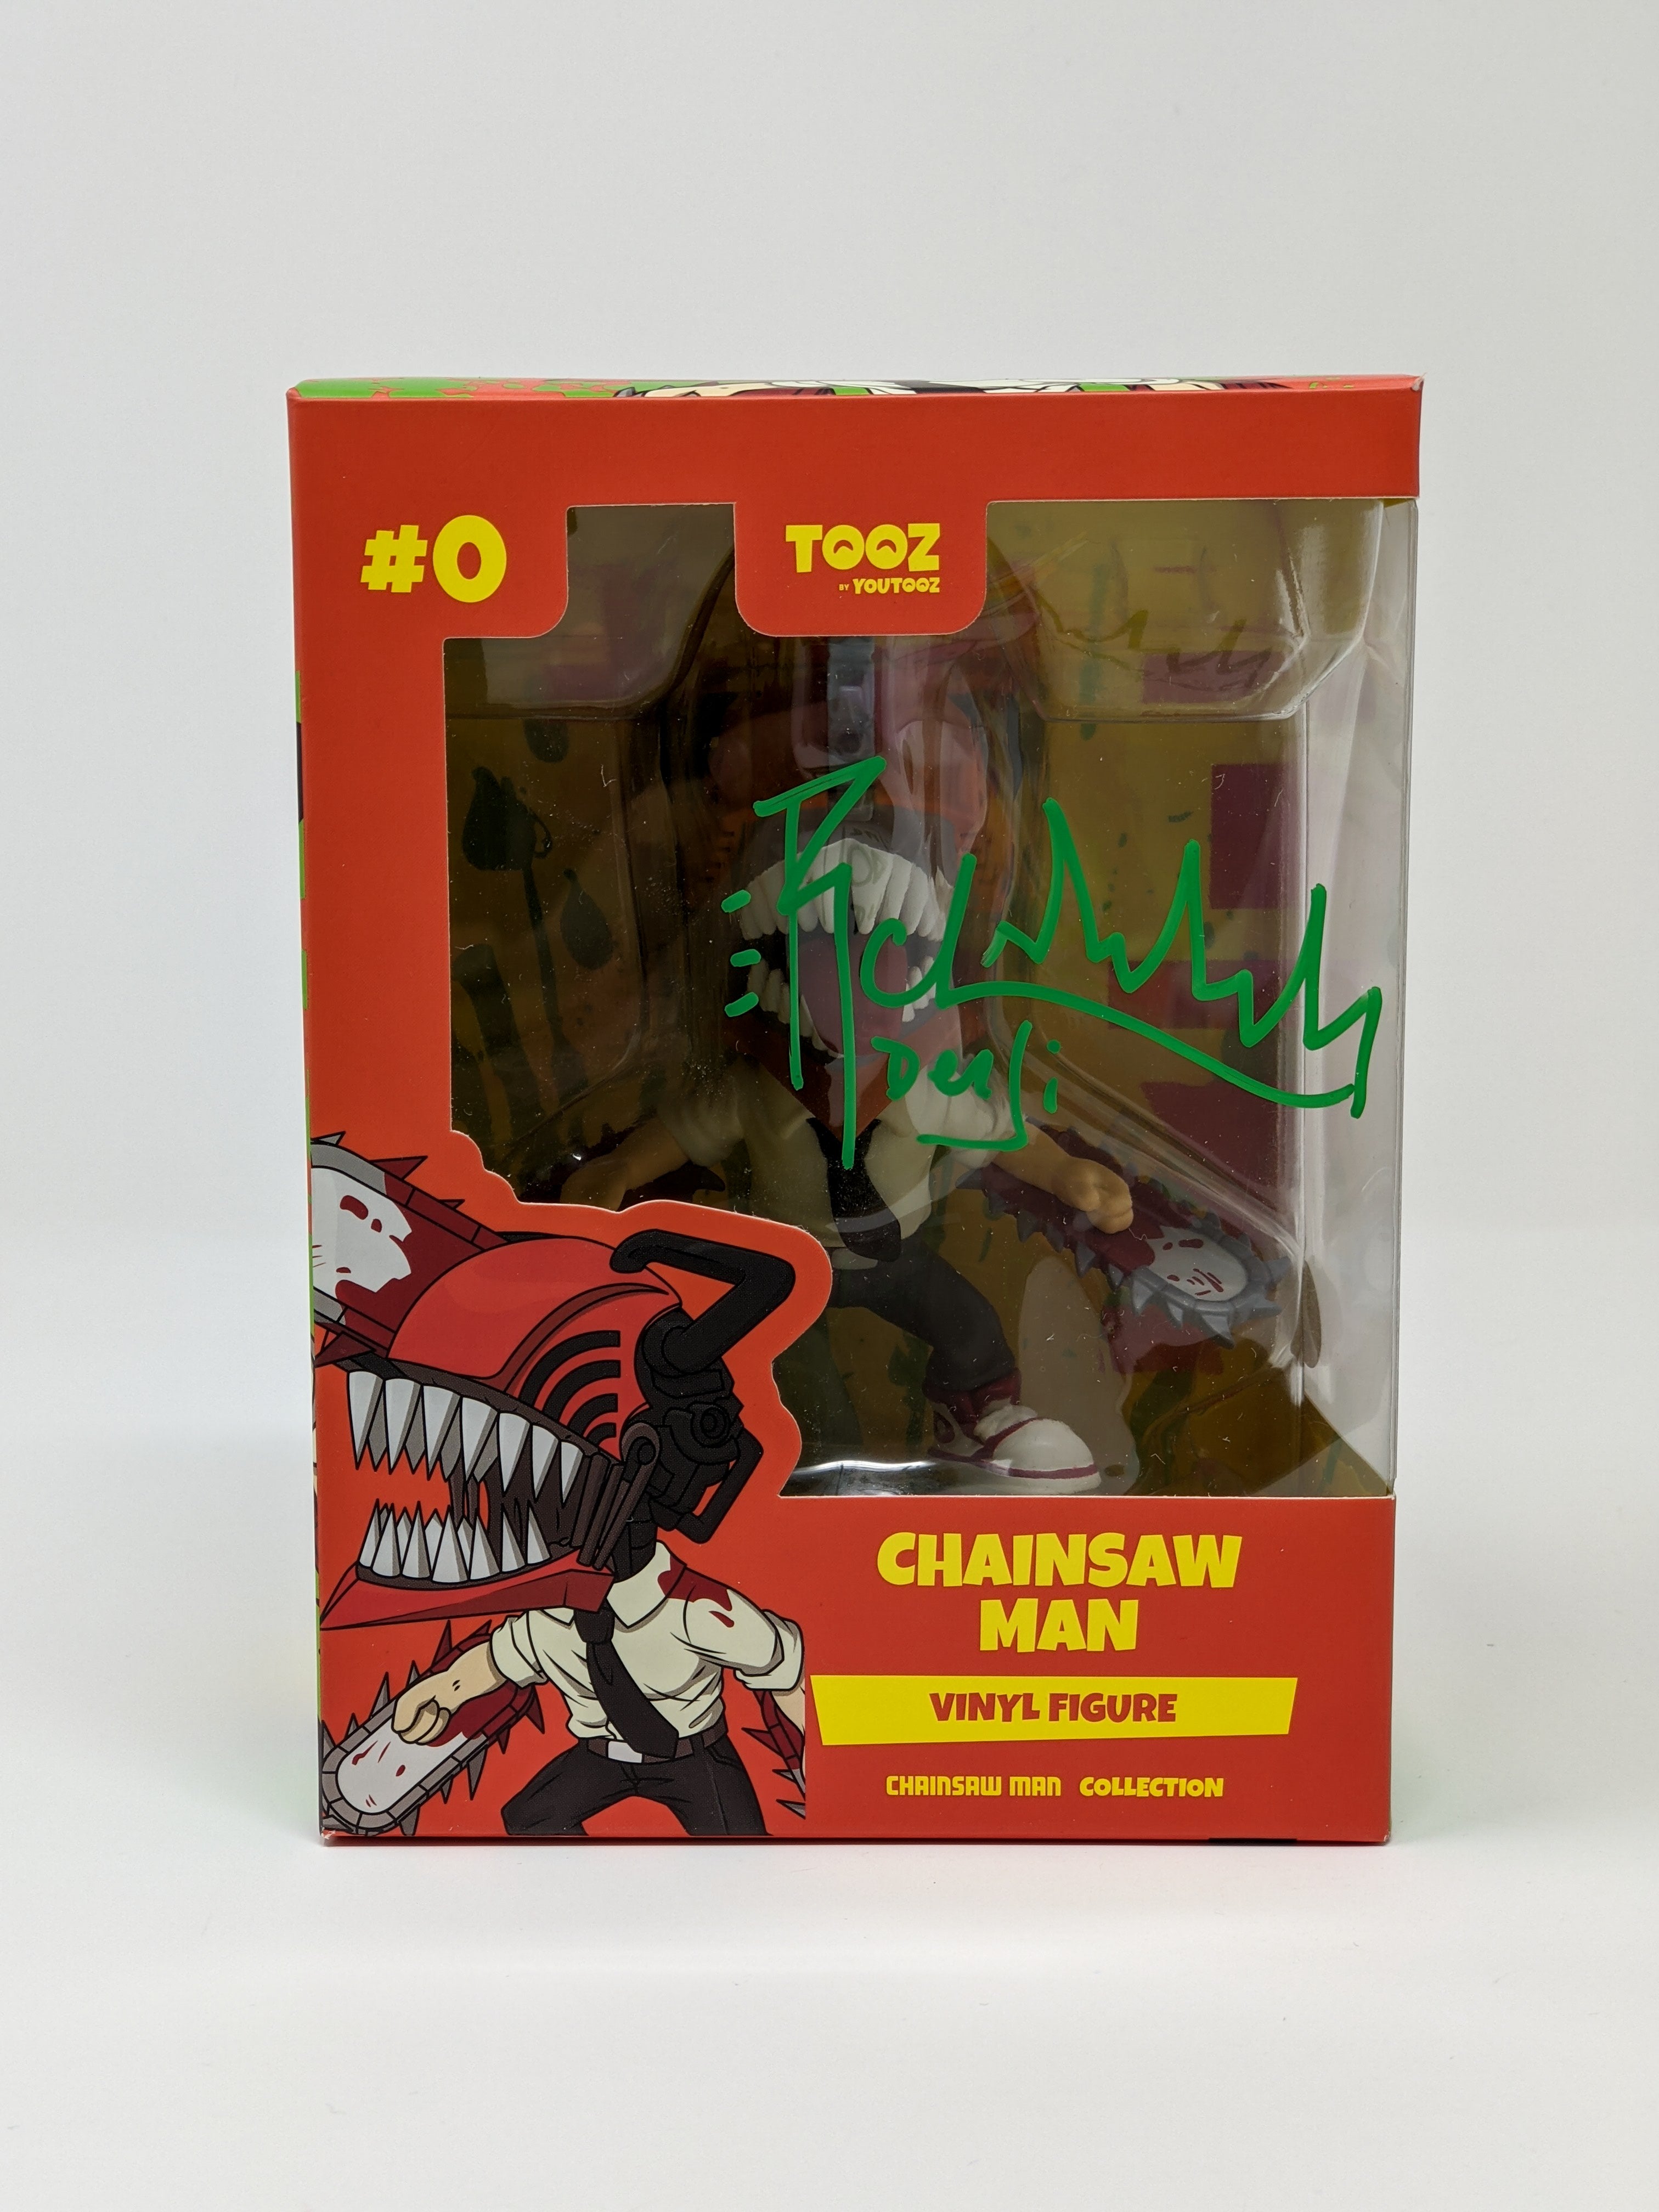 Ryan Colt Levy Signed Chainsaw Man #0 YouTooz Vinyl Figure JSA Certified Autograph